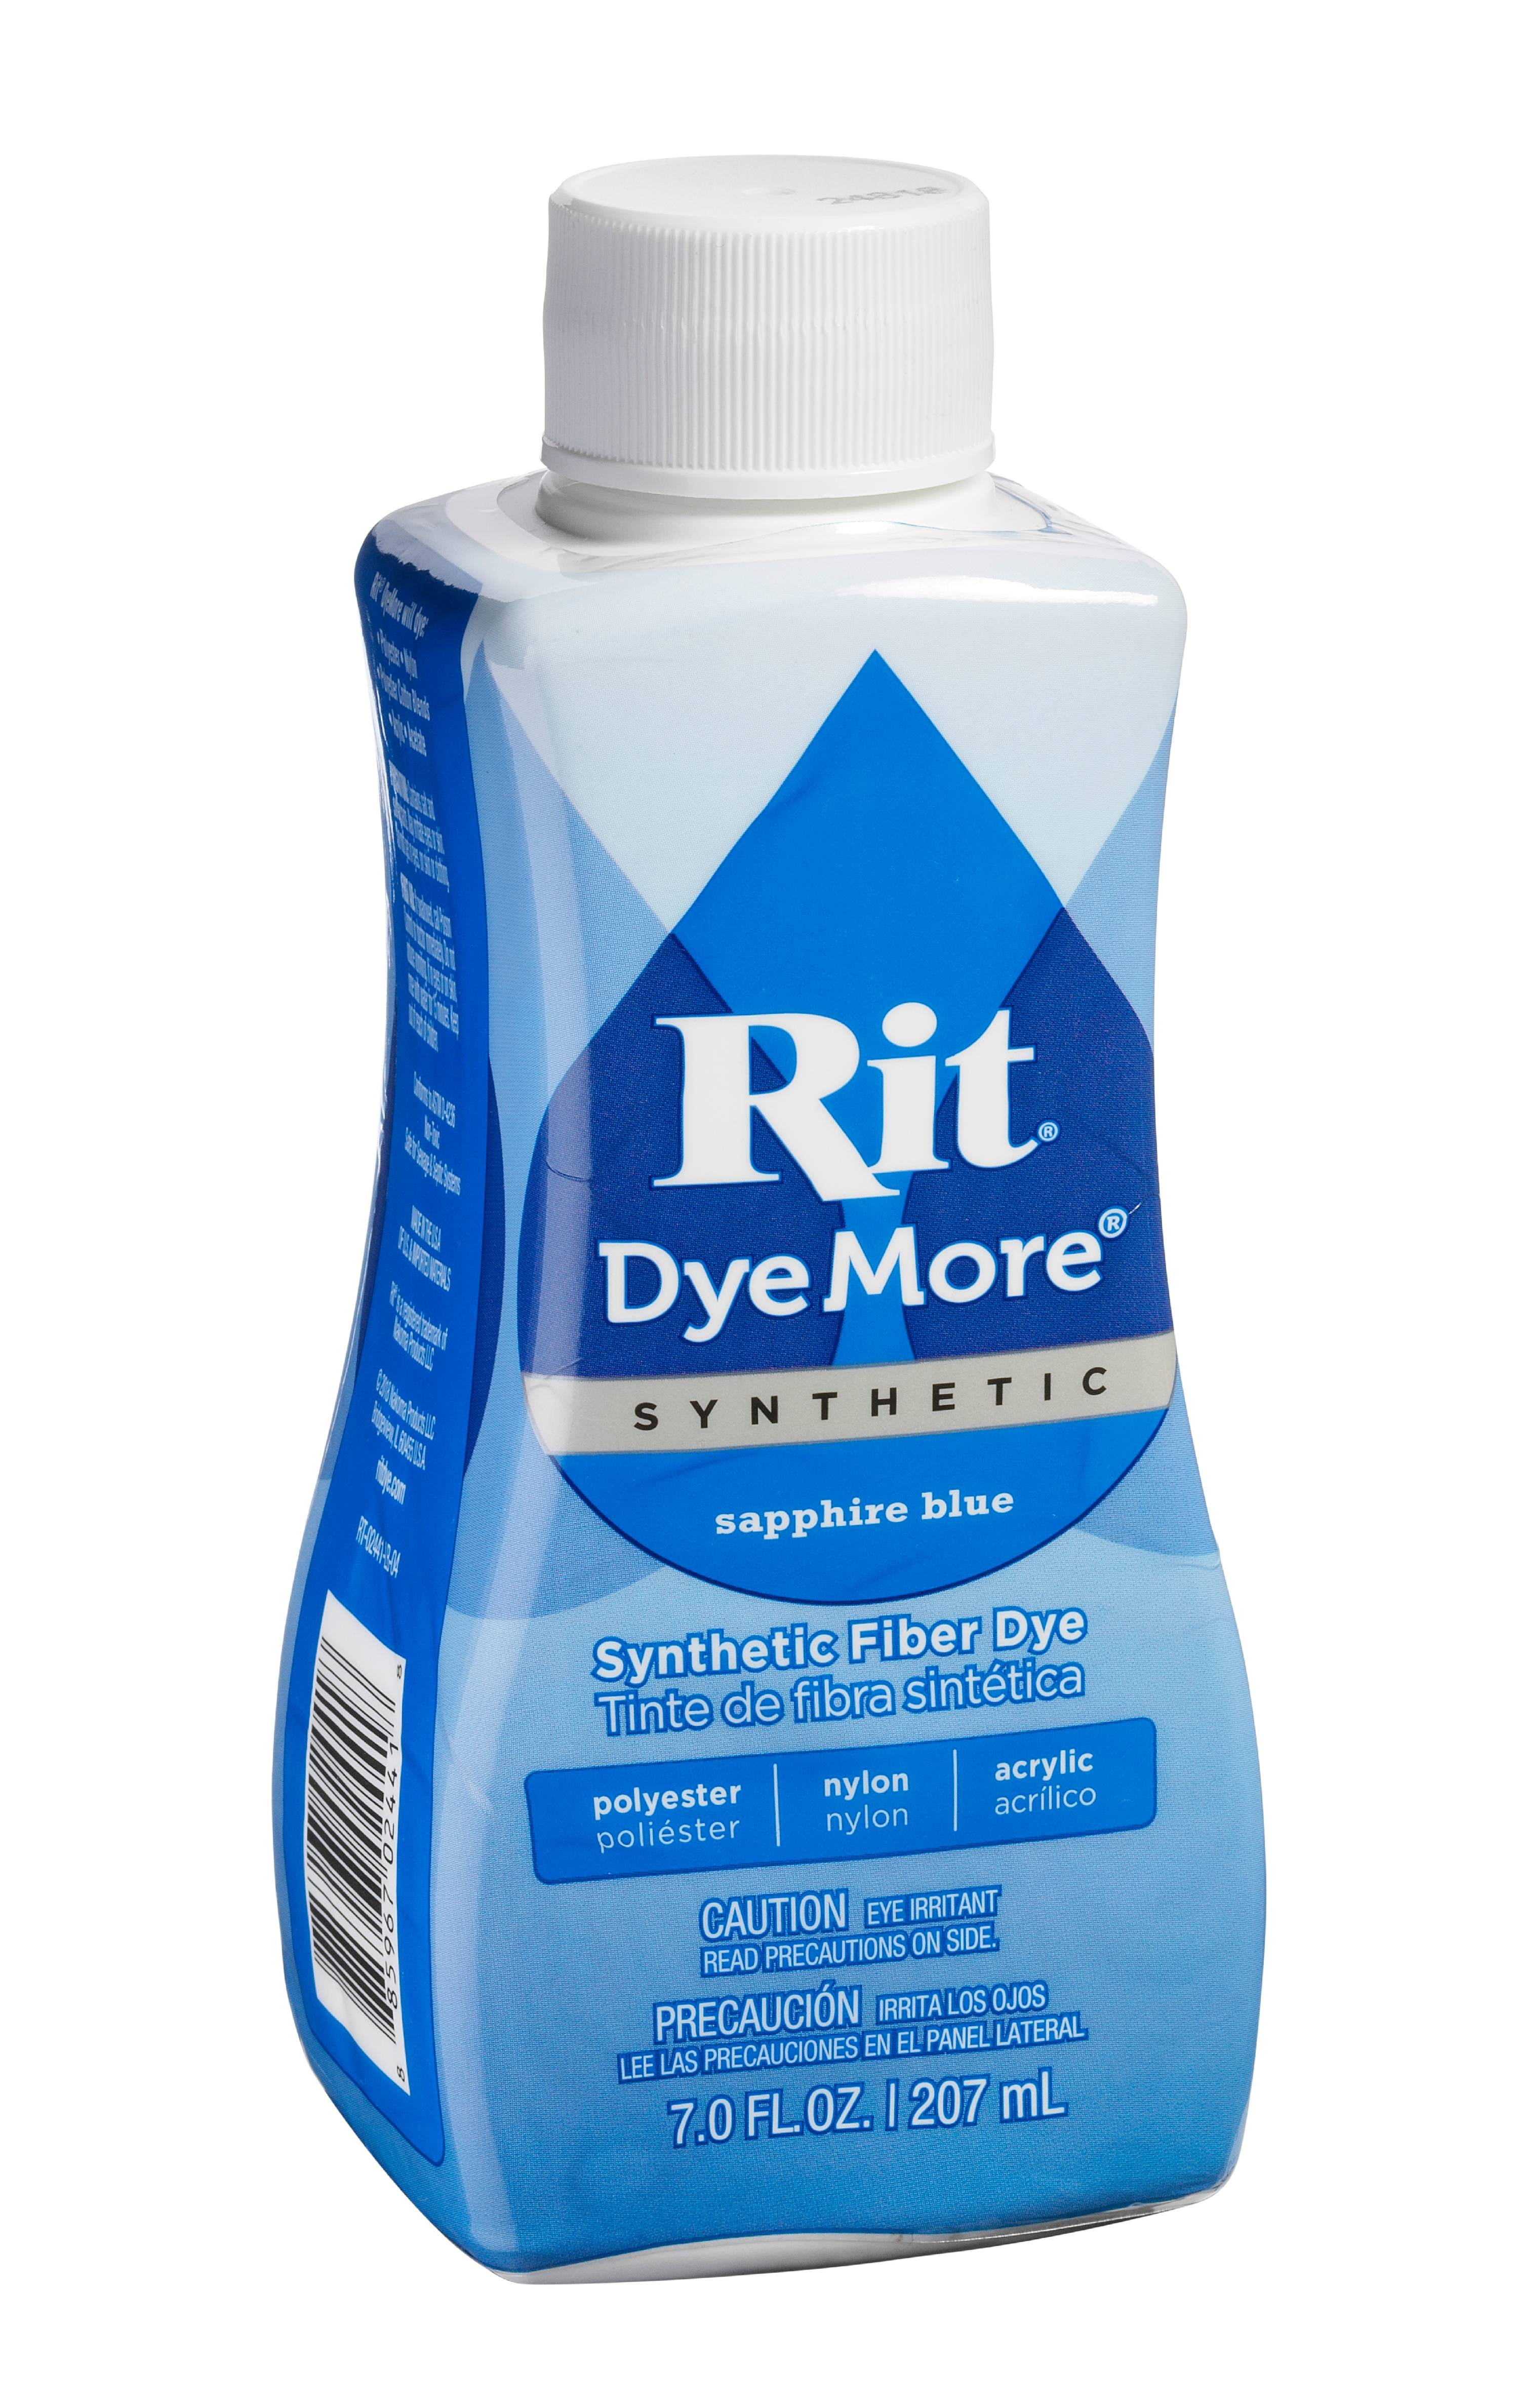 Rit DyeMore Synthetic Fiber Dye - Midnight Navy, 7 oz 